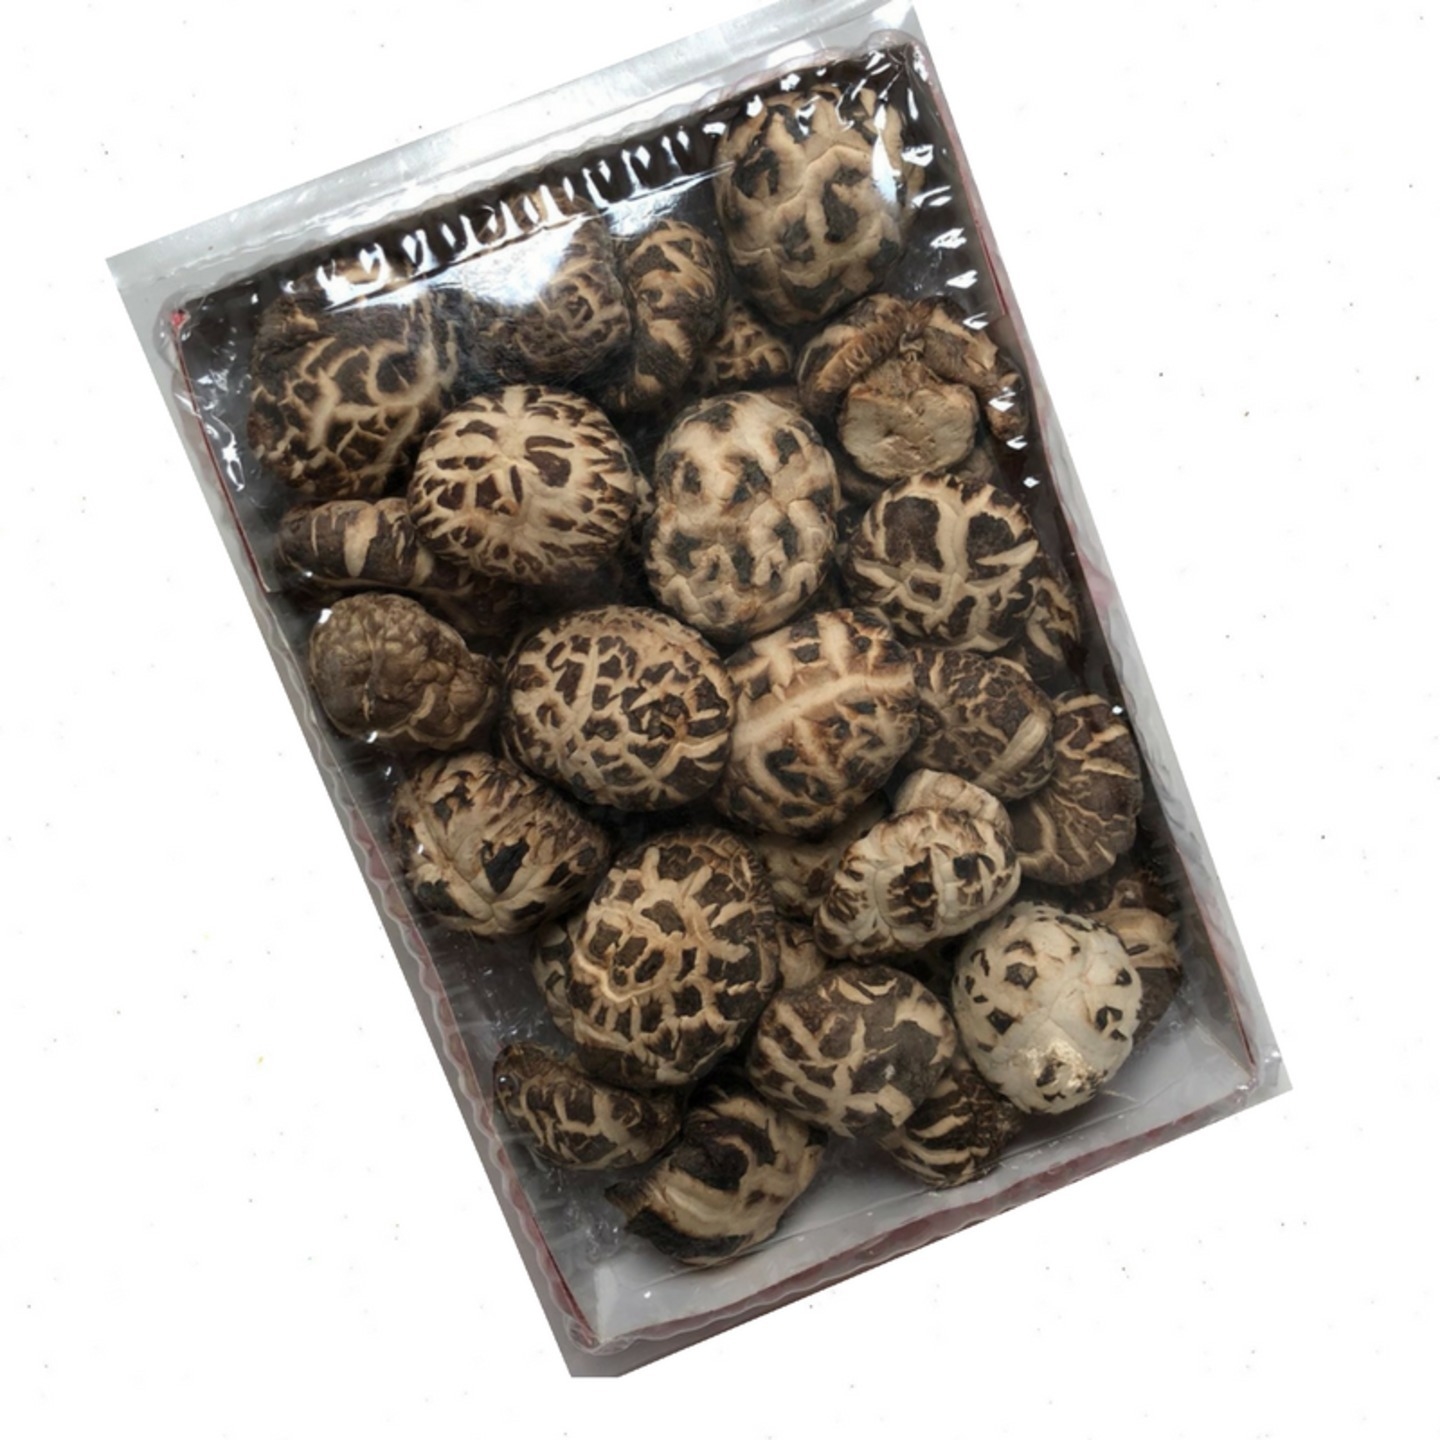 2-PACK PROMOTION Box-Packed Japanese Dried Mushroom 300g X 2 PACKS